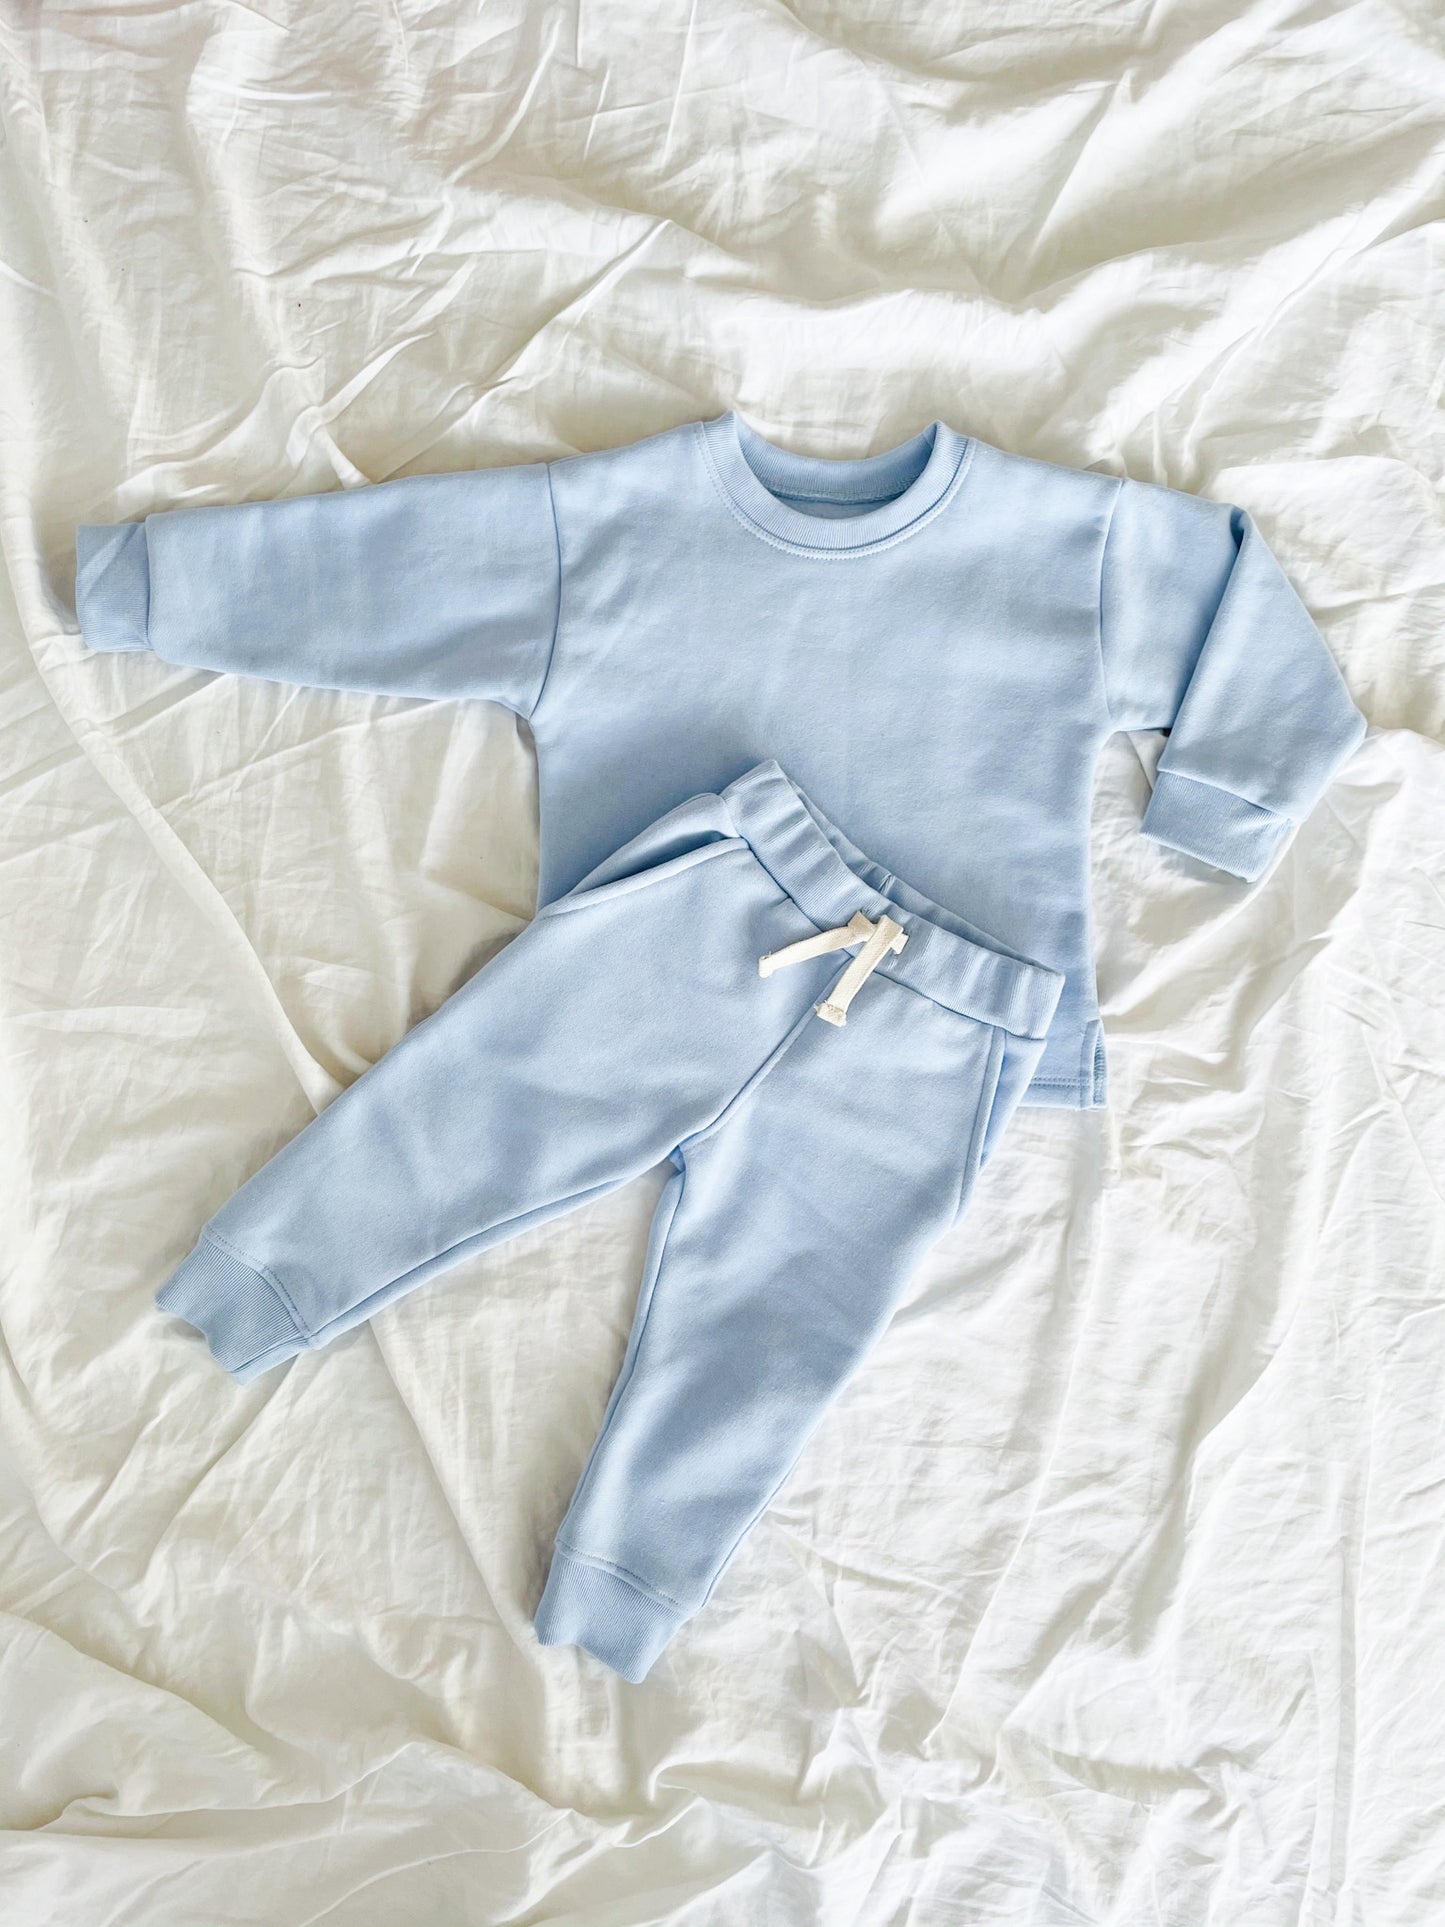 Unisex Fleece Set - Baby Blue